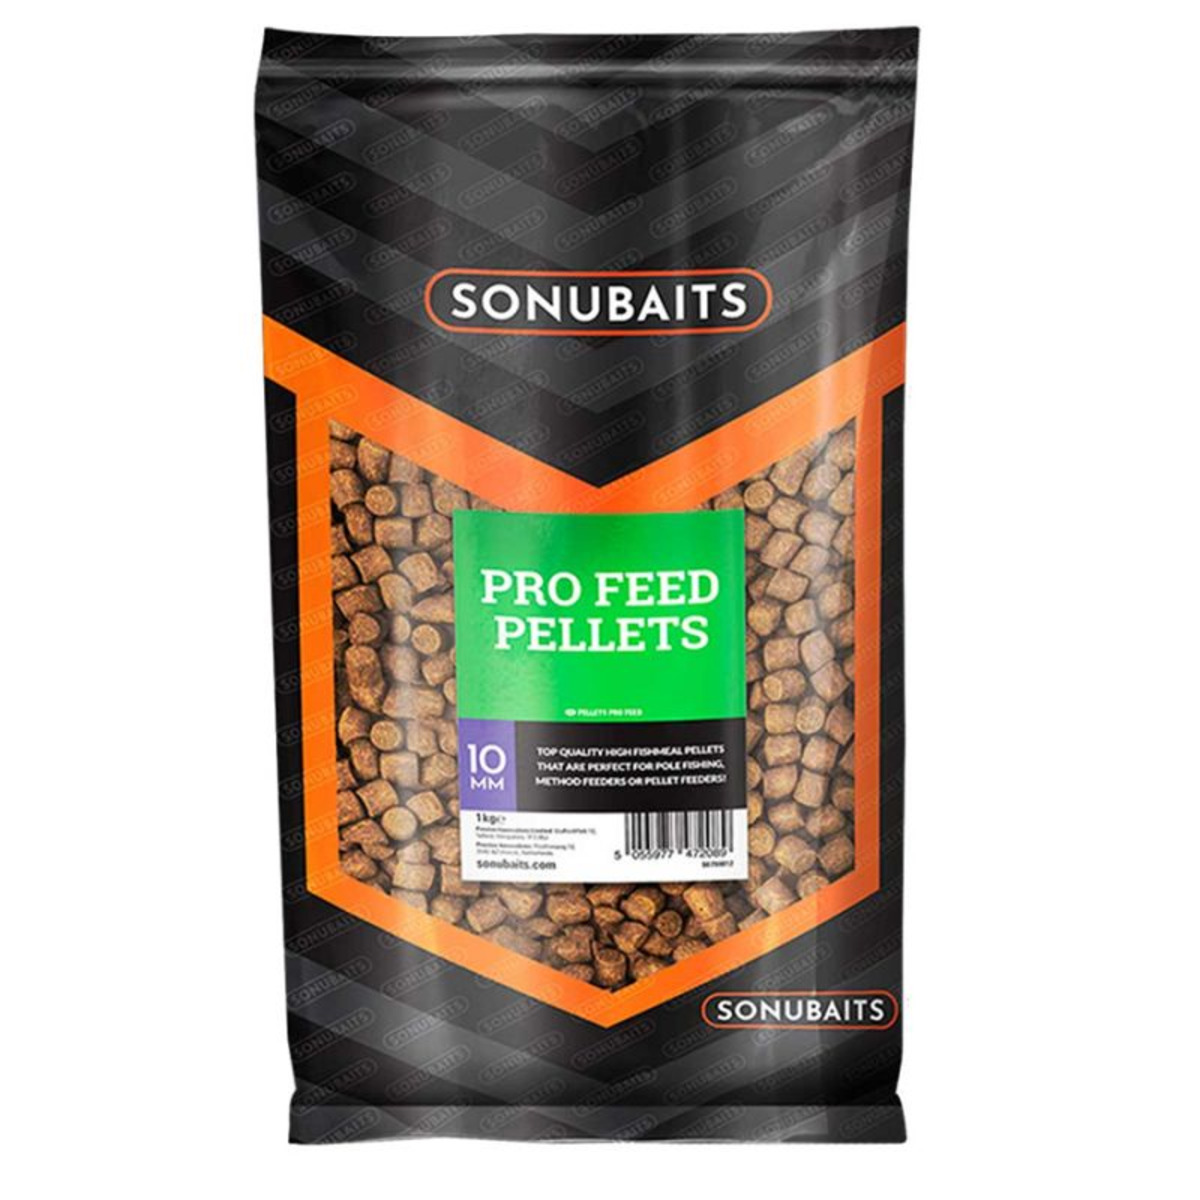 Sonubaits Pro Feed Pellets - 10 mm - 1 kg